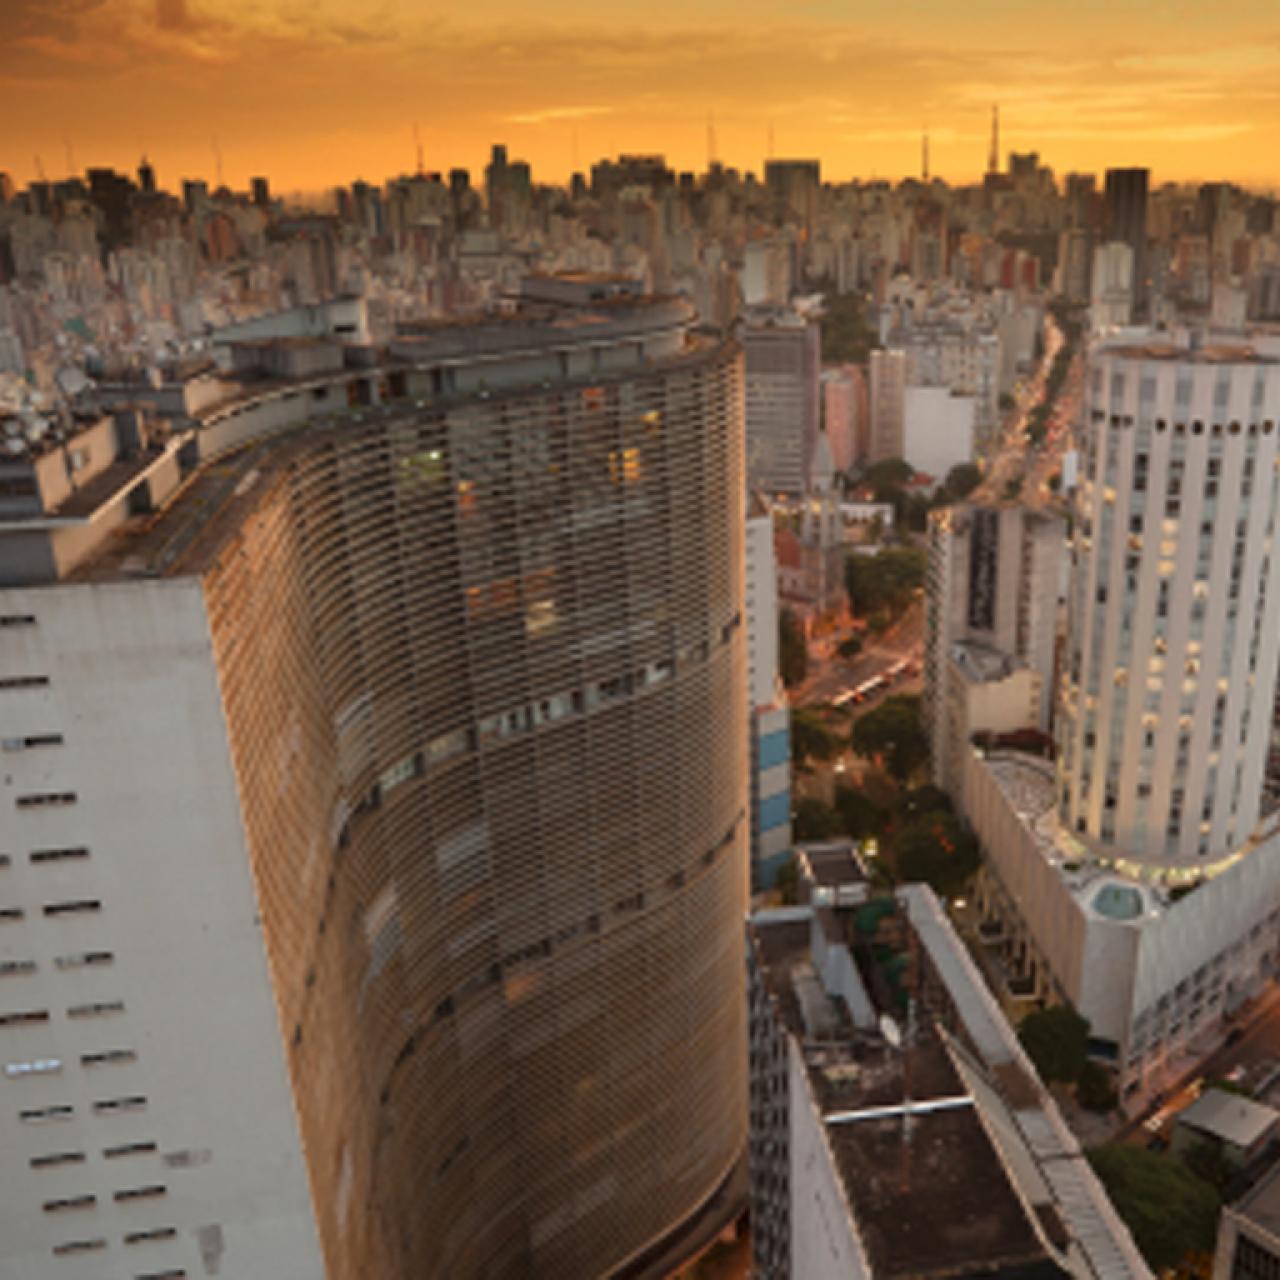 Sao Paulo Travel Guide